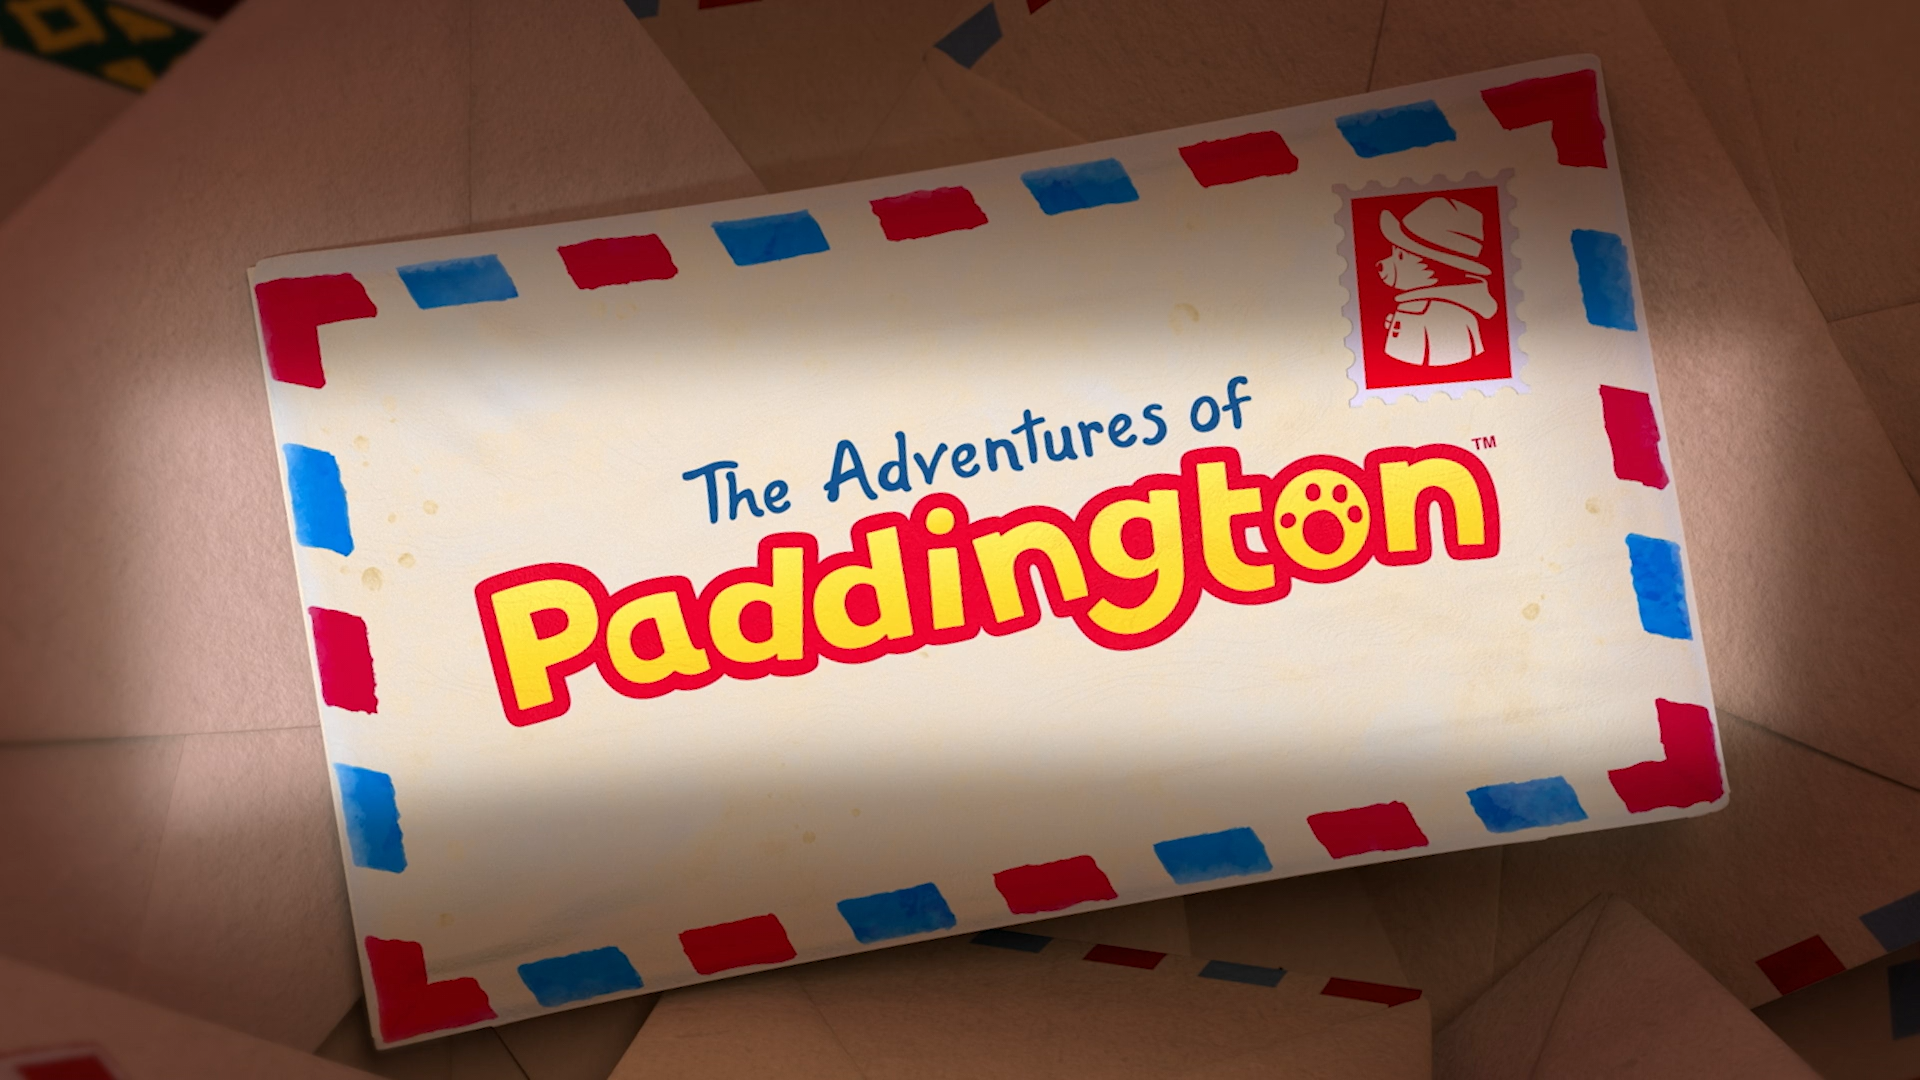 Paddington' TV Series With Ben Whishaw Coming to Nickelodeon